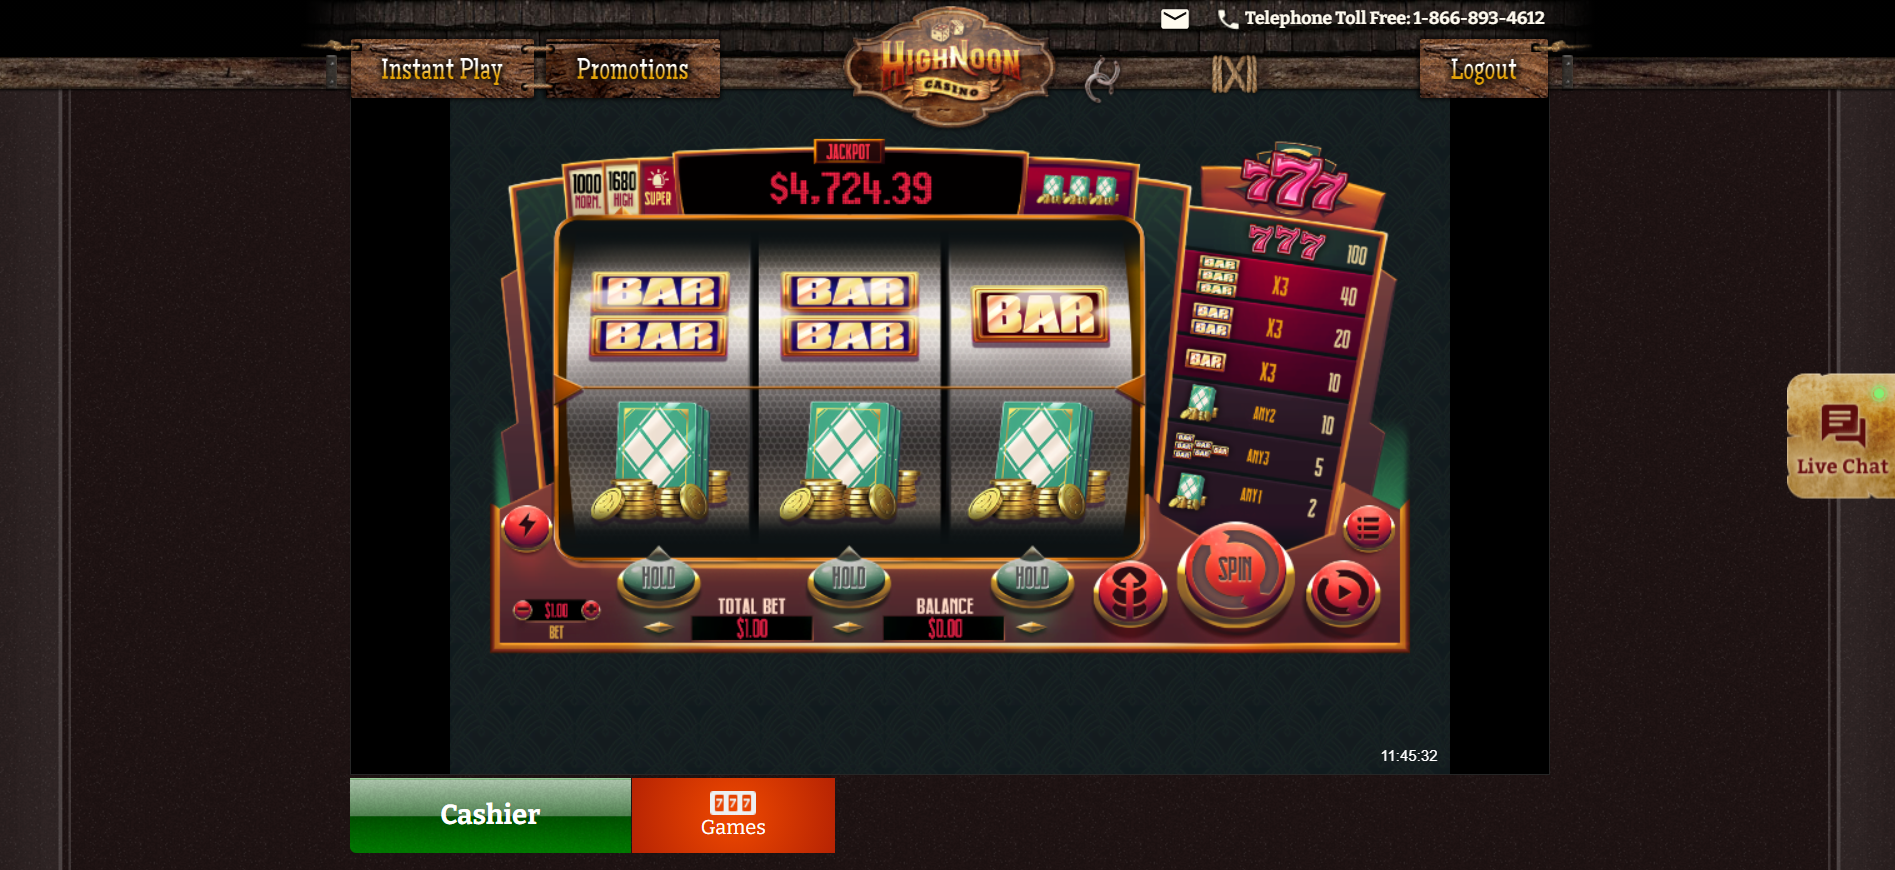 High Noon Casino Slot Games